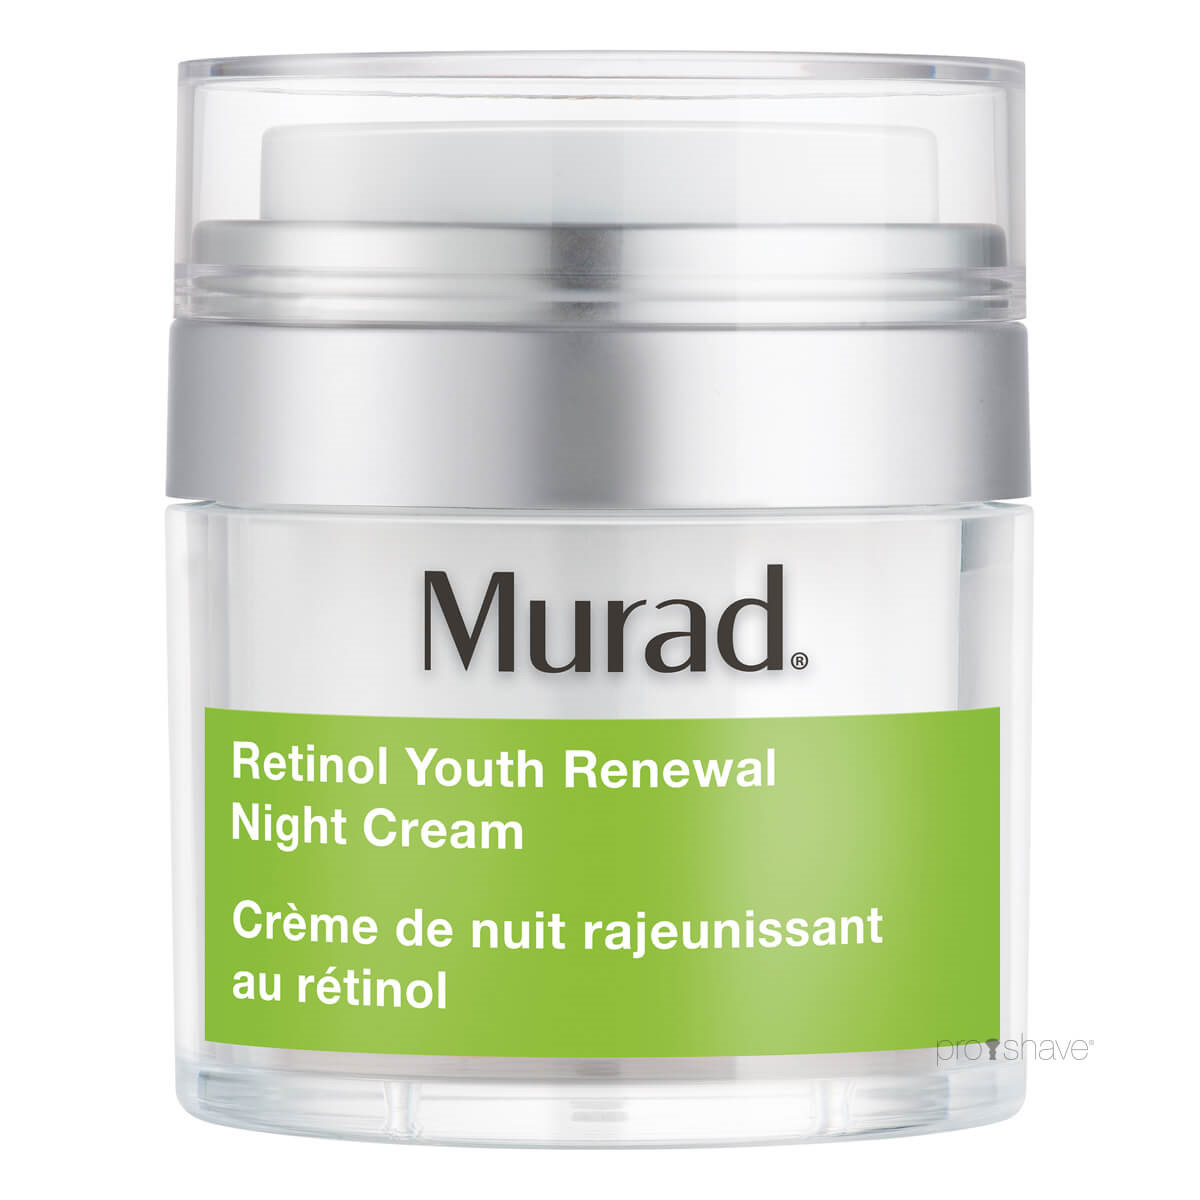 Billede af Murad Retinol Youth Renewal Night Cream, Resurgence, 50 ml.